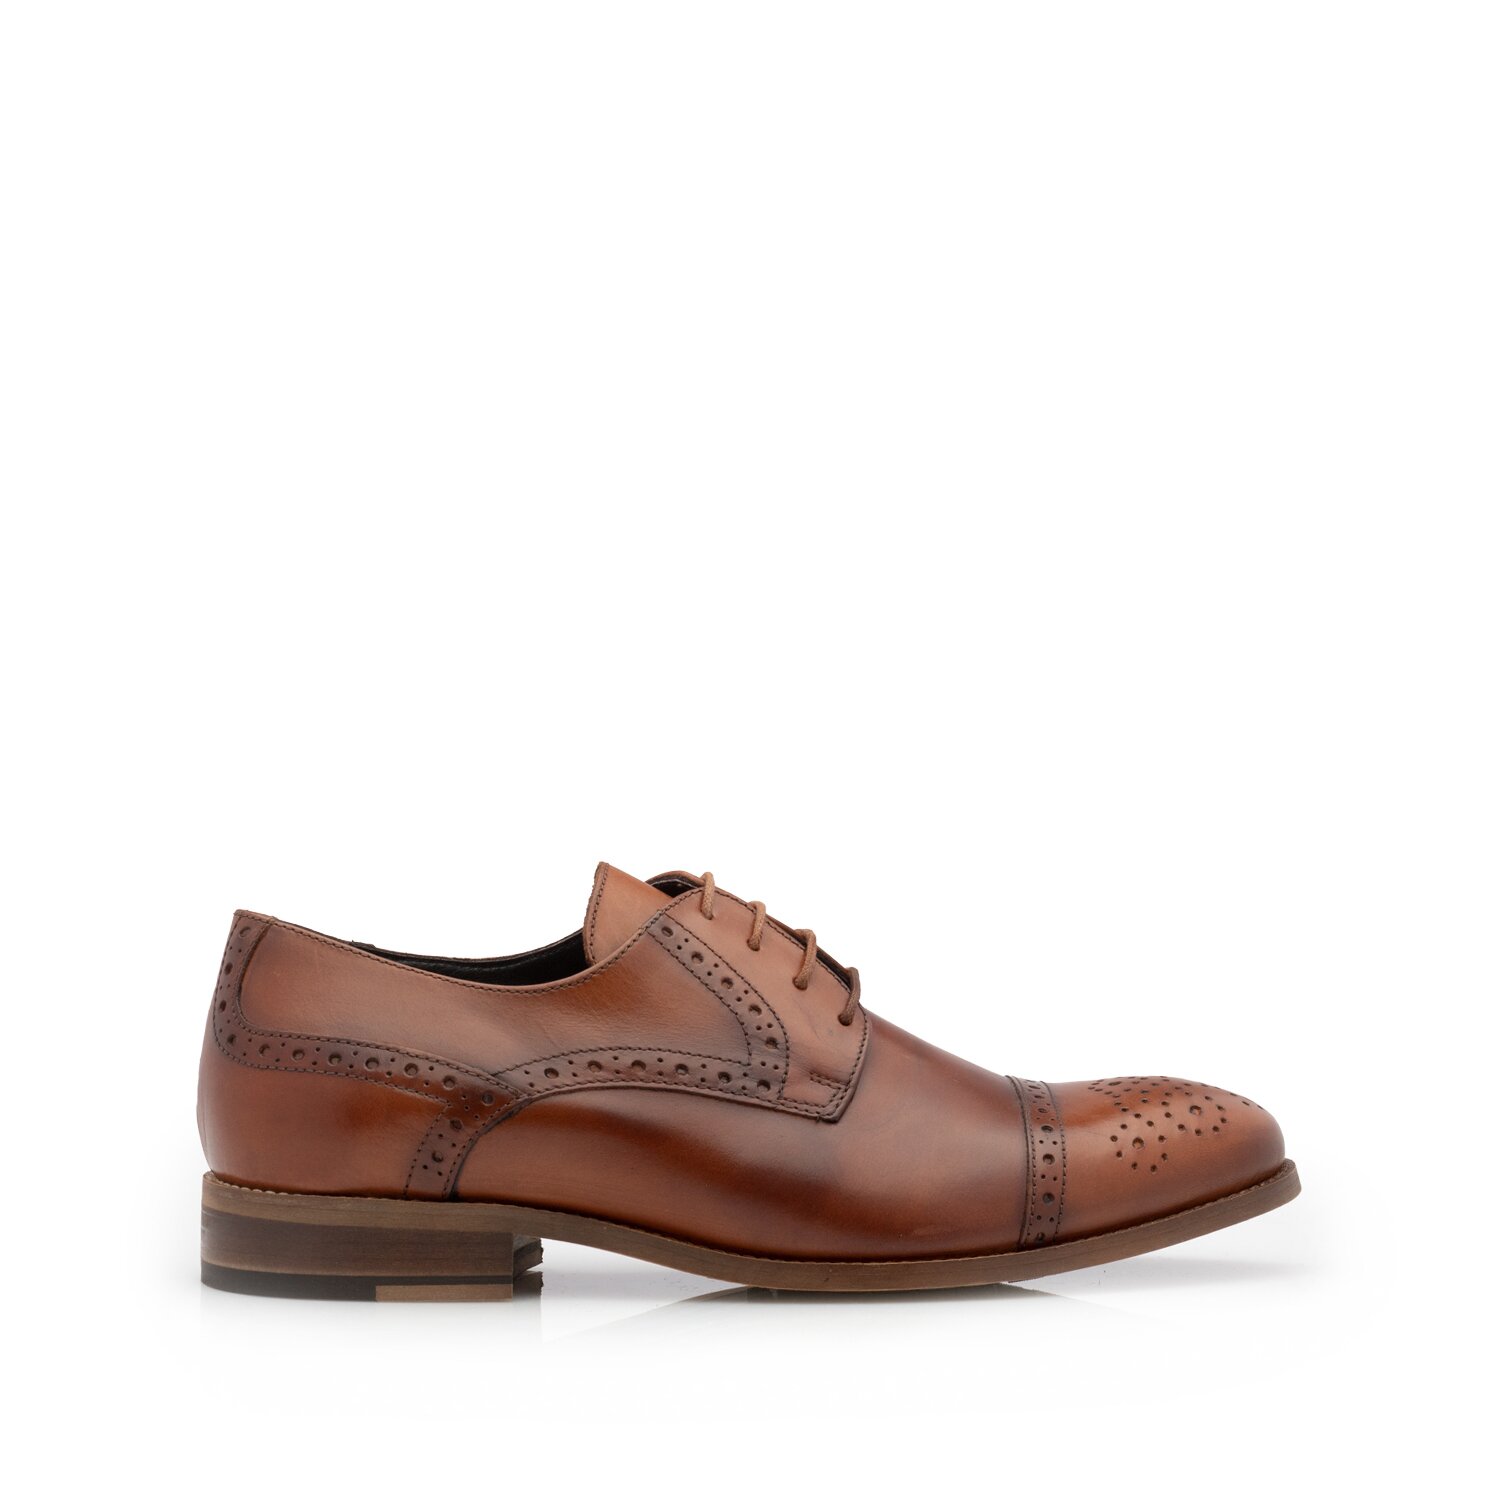 Pantofi casual barbati din piele naturala, Leofex - 537 Cognac box